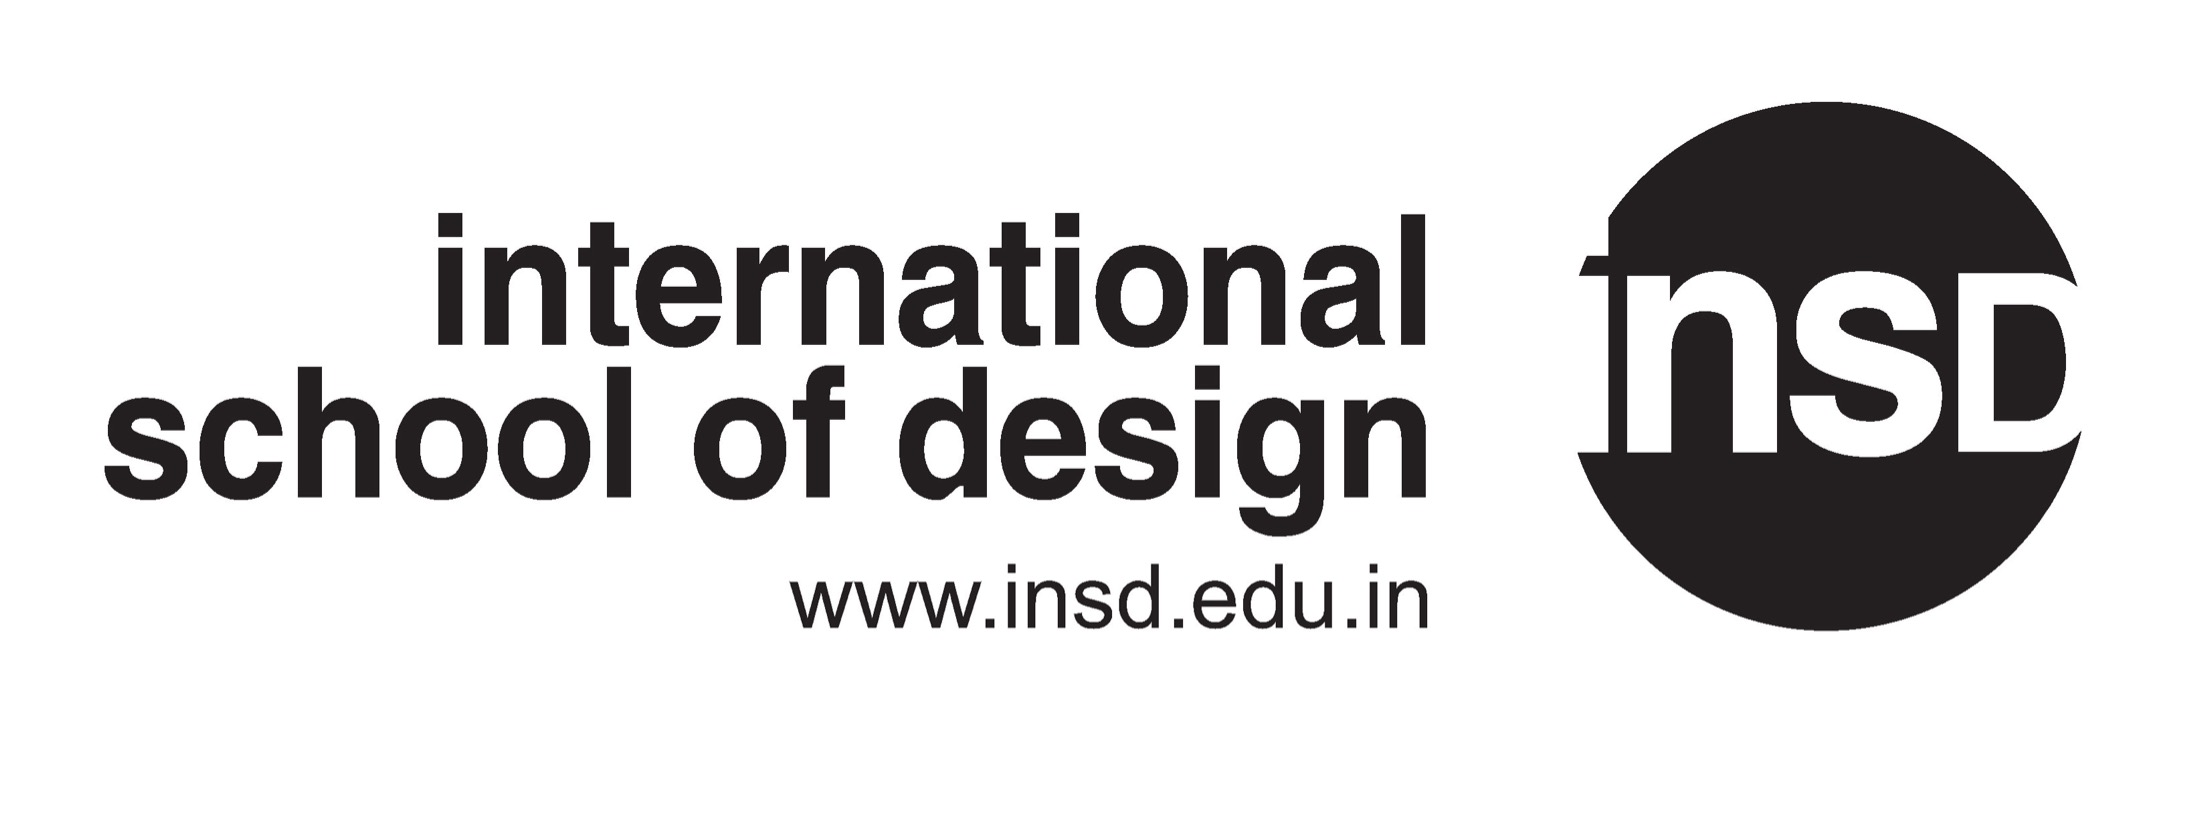 International School of Design logo